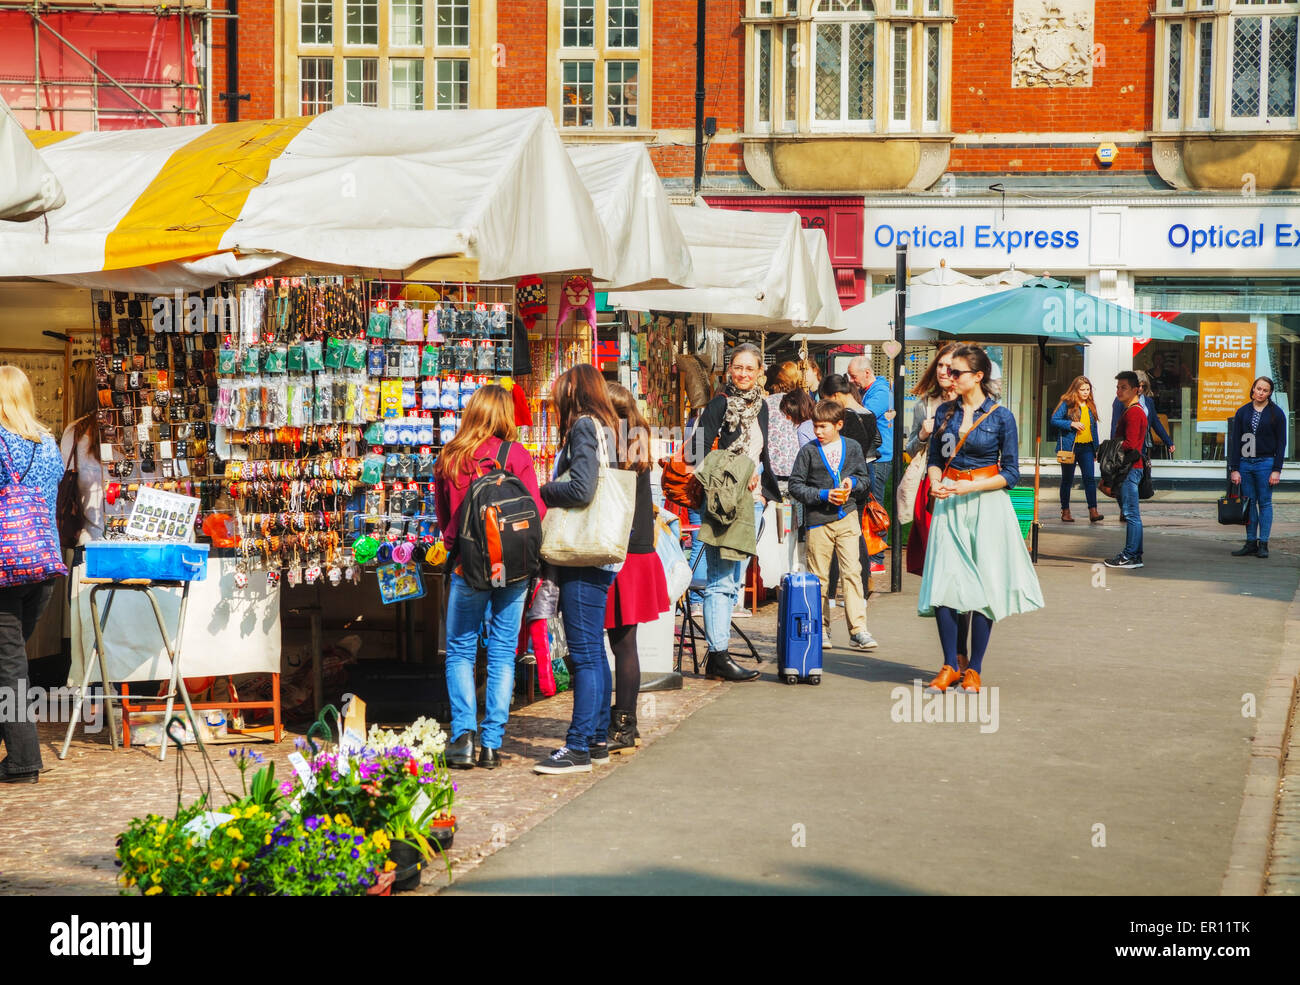 CAMBRIDGE, UK - APRIL 9: Street souvenir shops at the Market square on April 9, 2015 in Cambridge, UK. Stock Photo